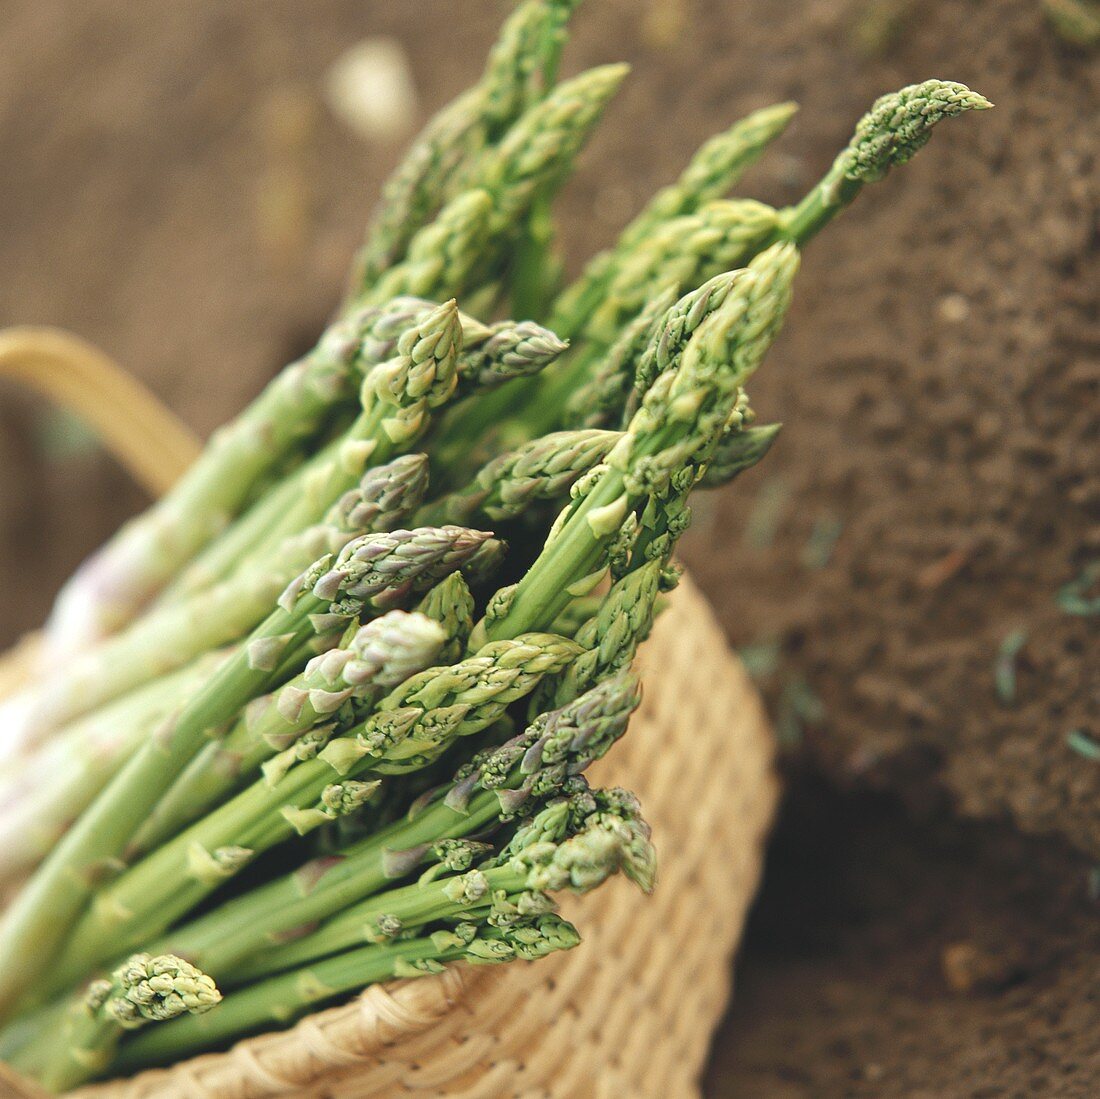 Green asparagus - freshly cut in basket on soil